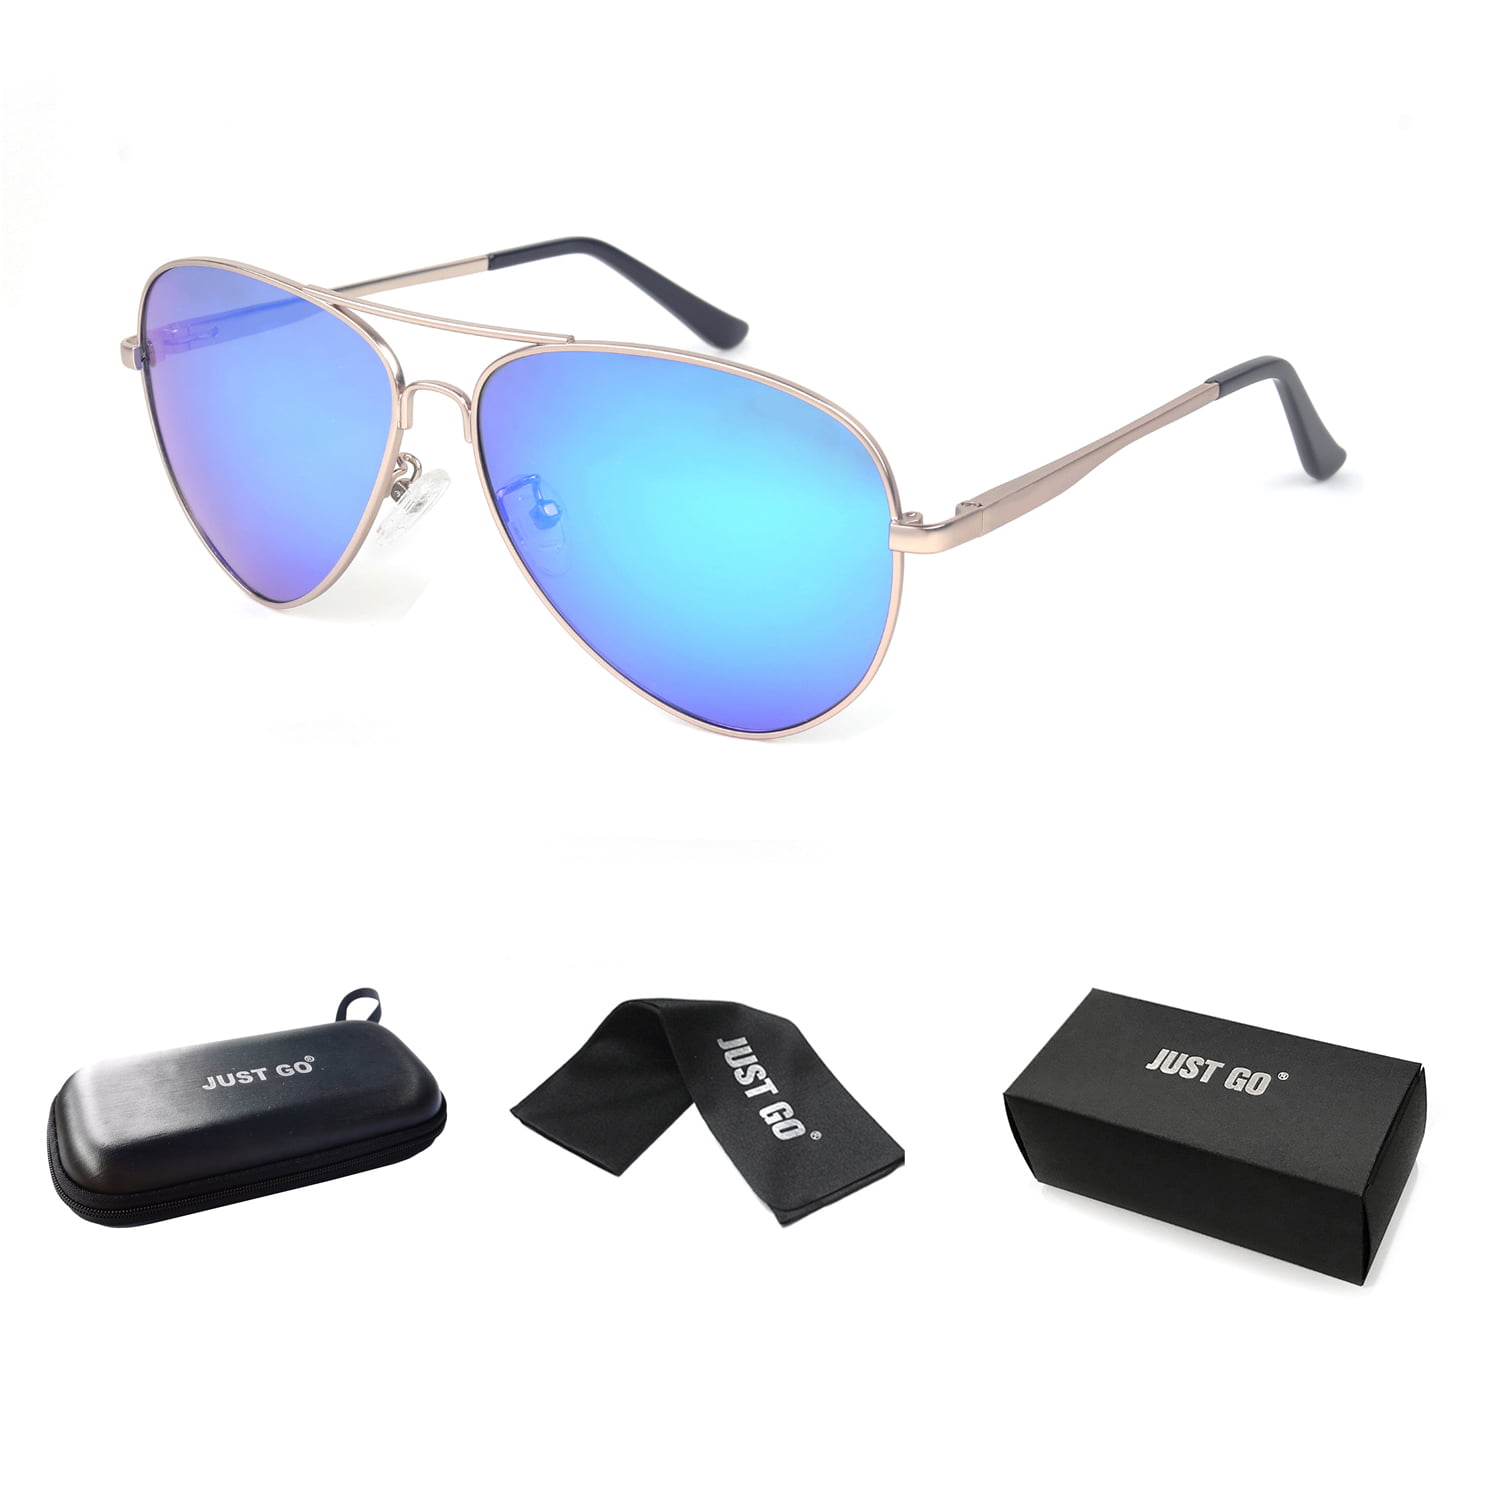 JUST GO Metal Frame Vintage Aviator Style Sunglasses with Case, Polarized  Lenses, 100% UV Protection, Matte Gold, Blue Revo | Sonnenbrillen